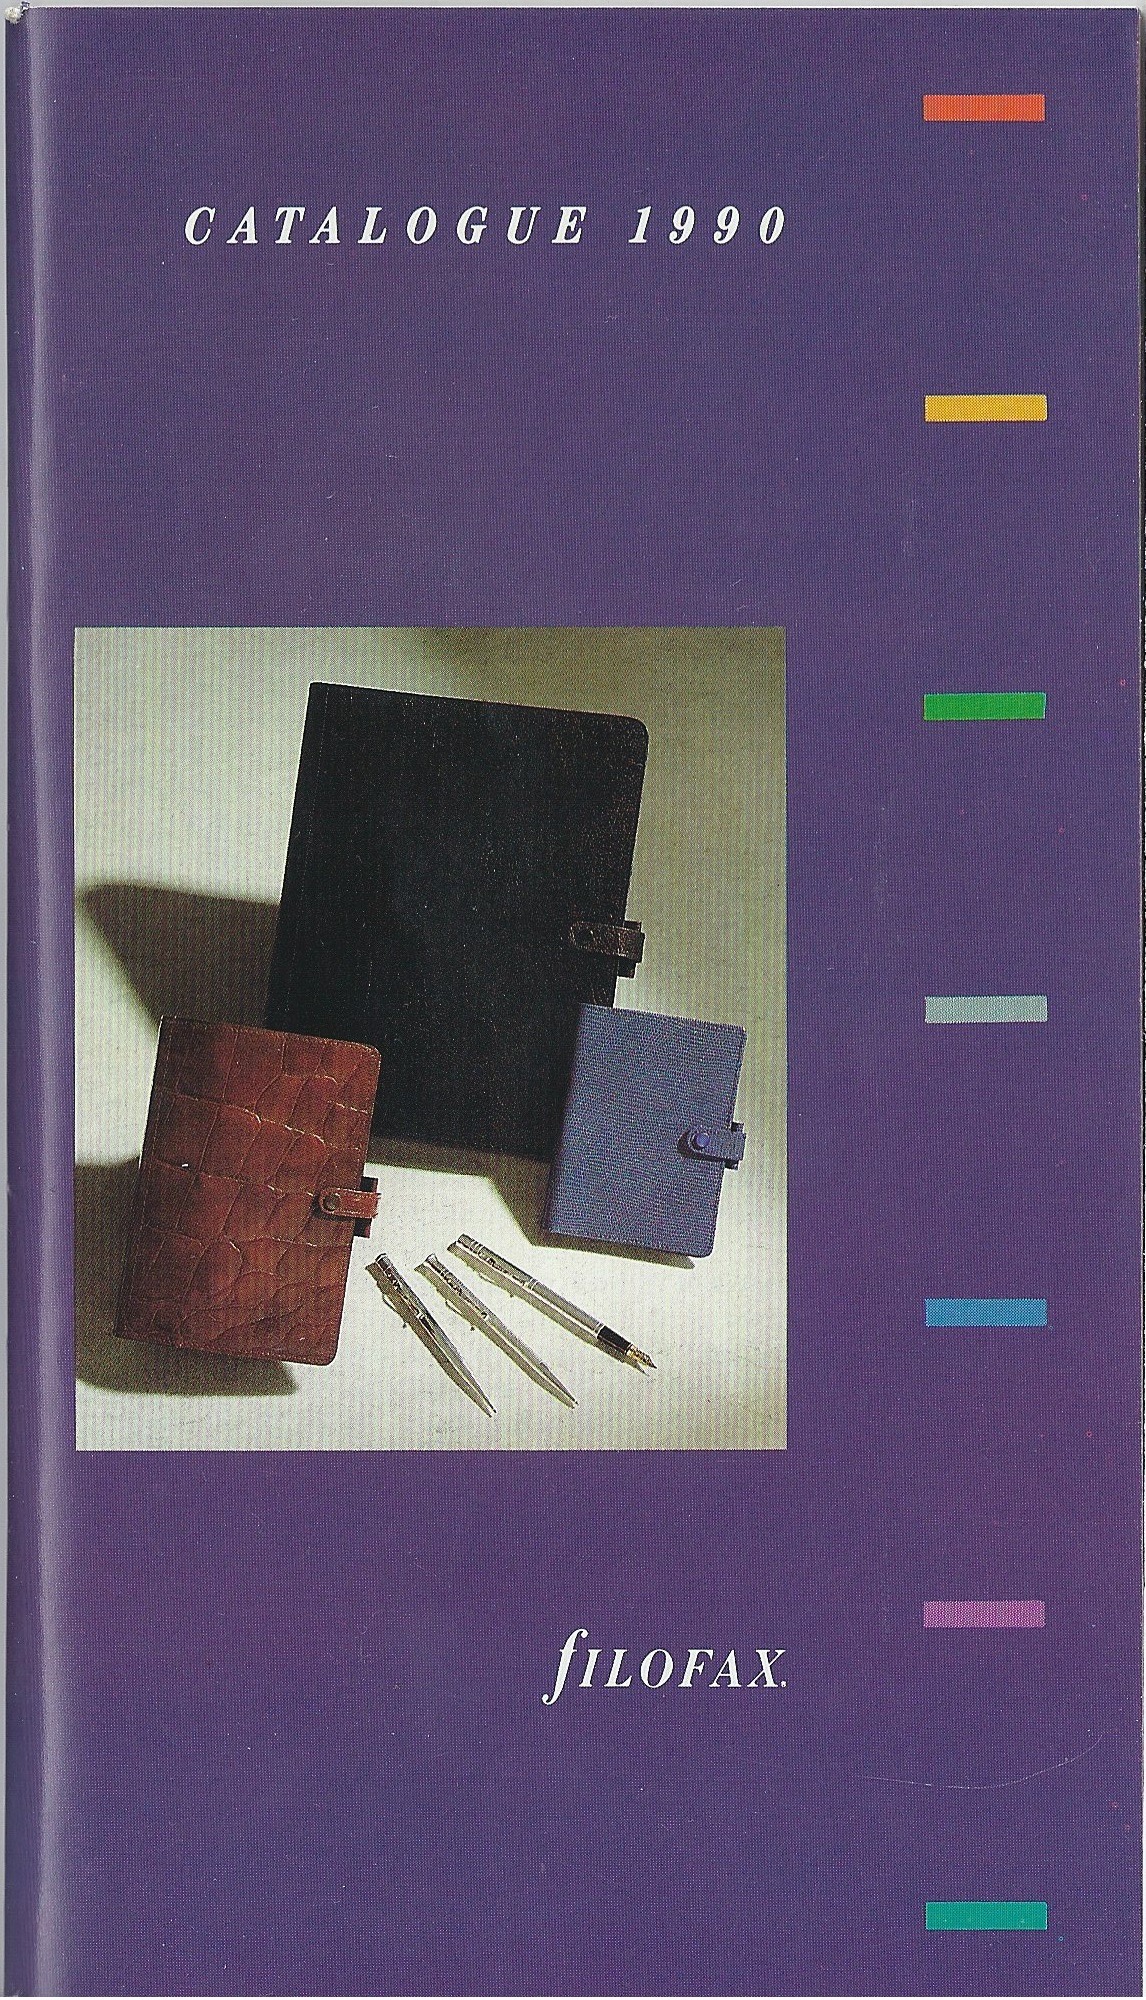 Filofax UK Full Catalogue 1990